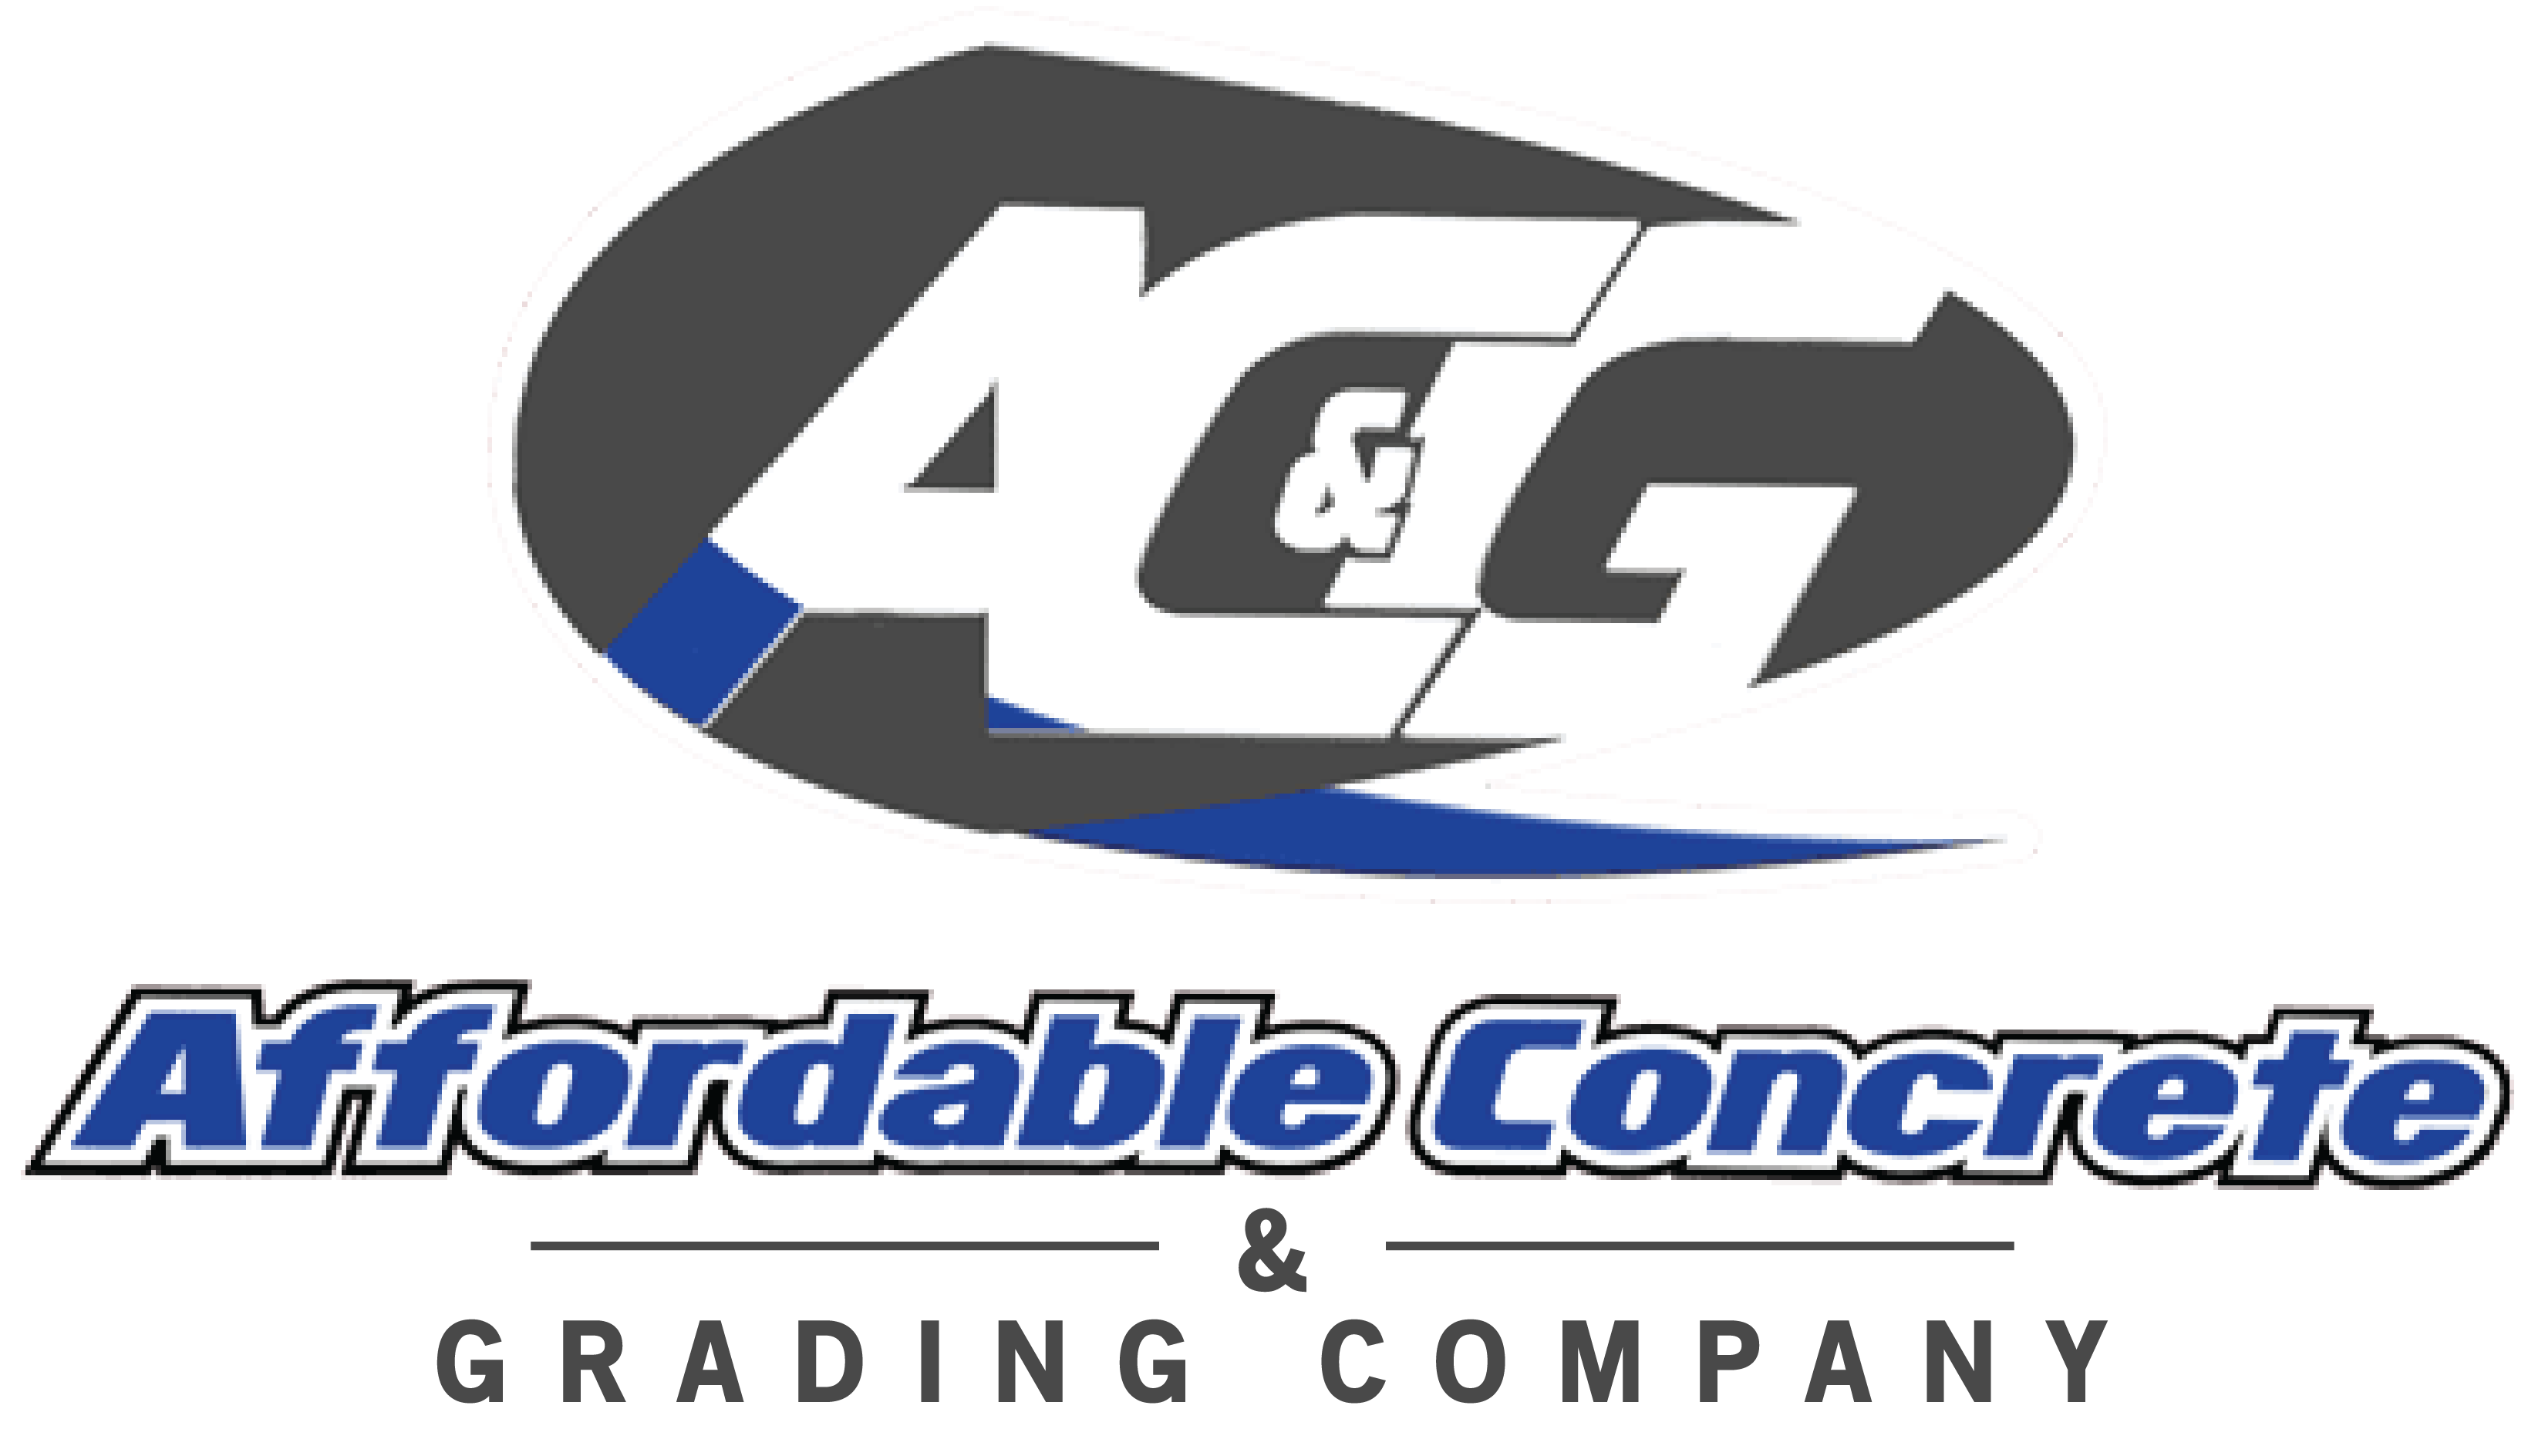 Affordable Concrete & Grading Co.